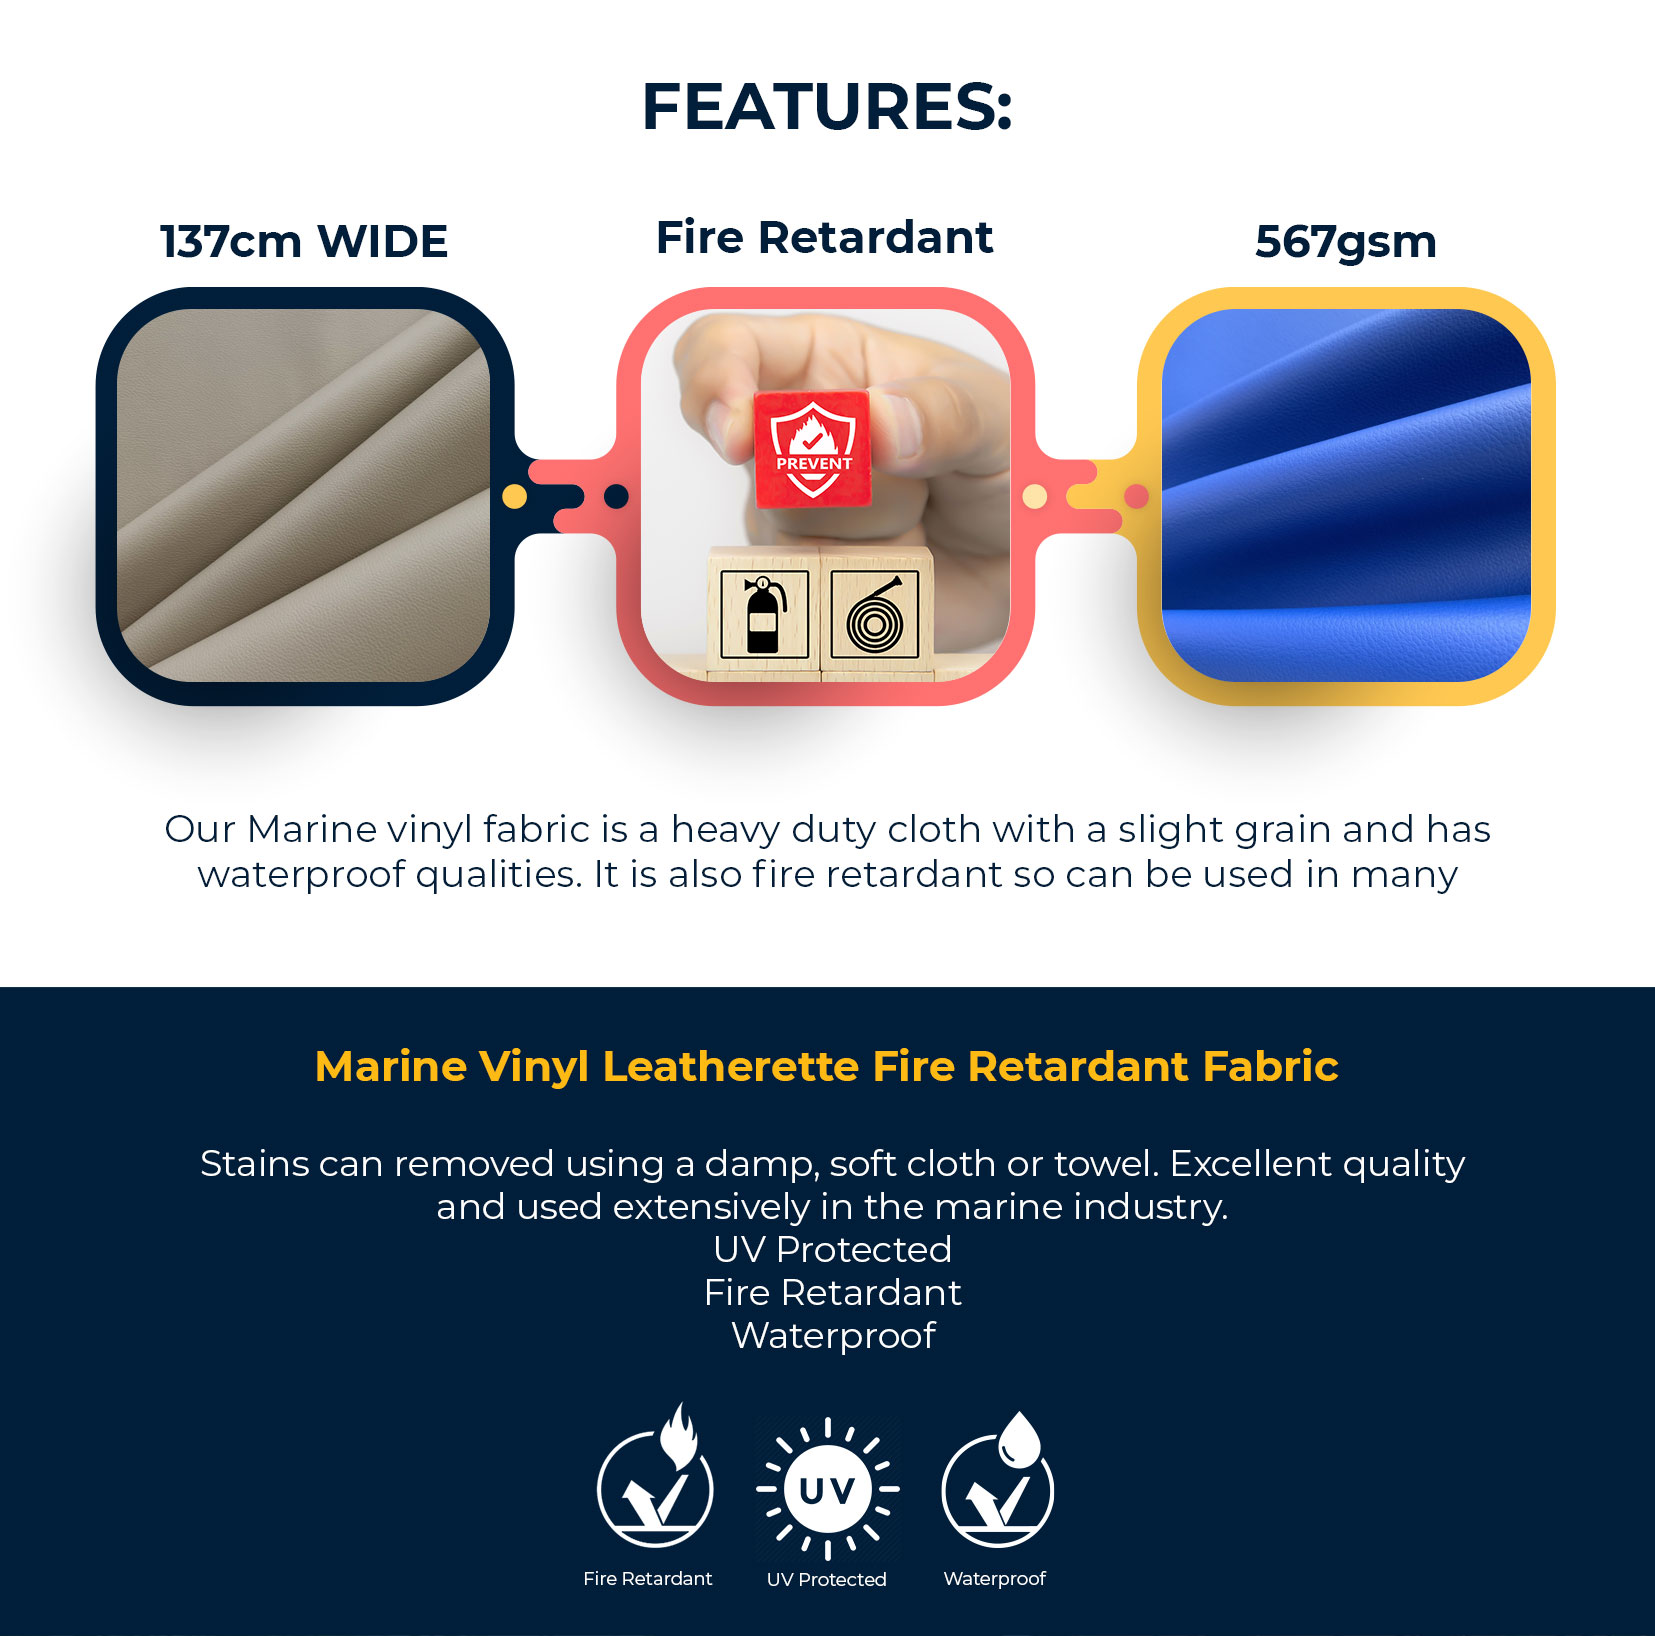 Marine Vinyl Leatherette Fire Retardant Fabric Features